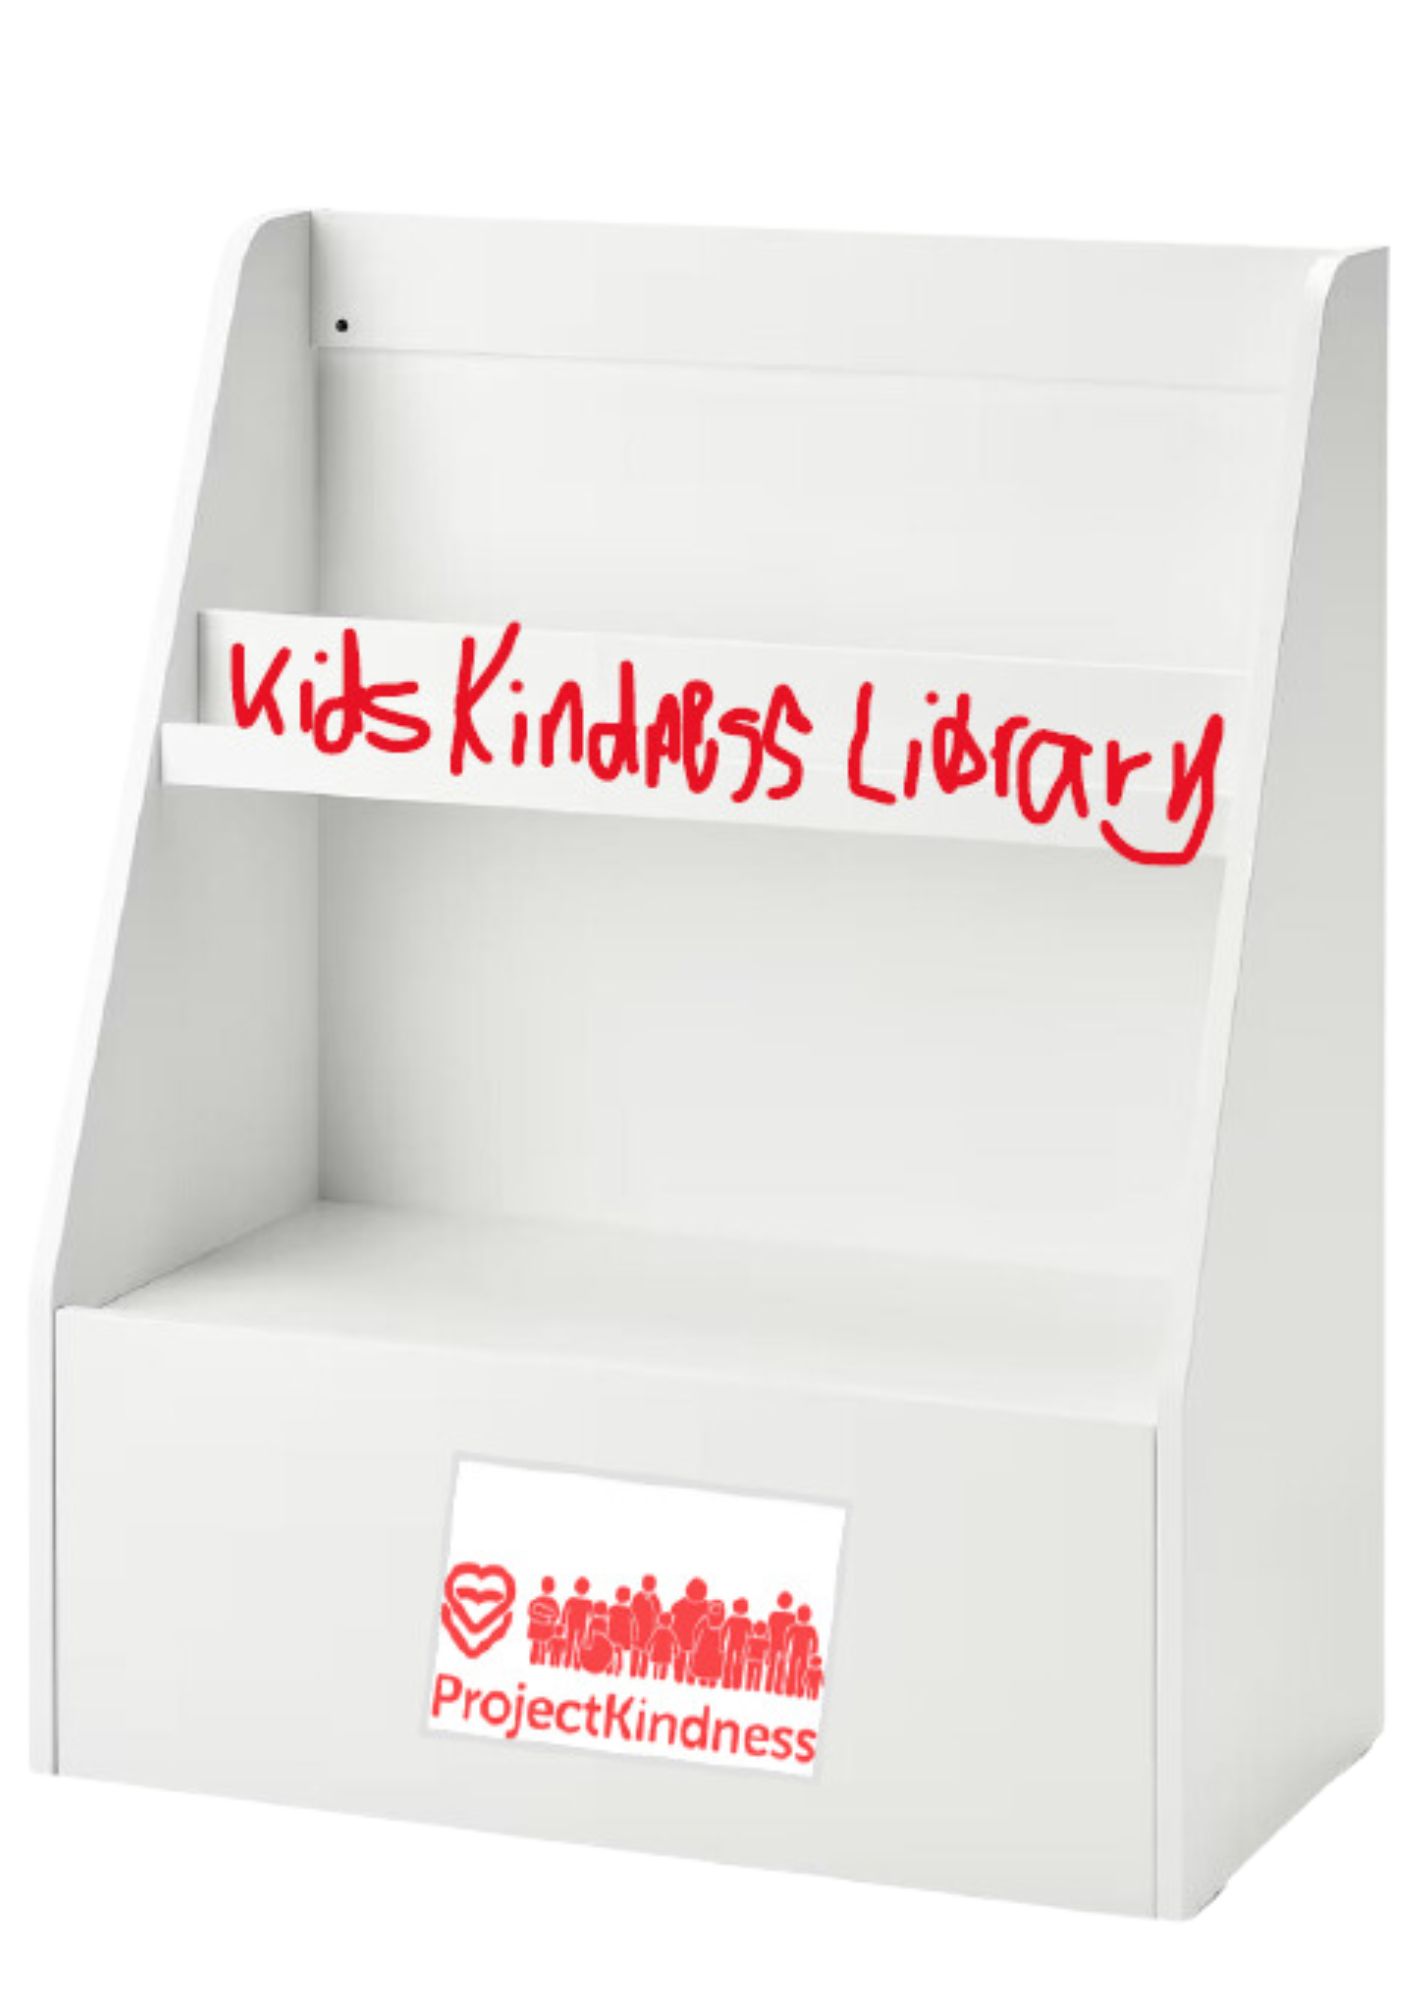 projectkindness kids kindness library